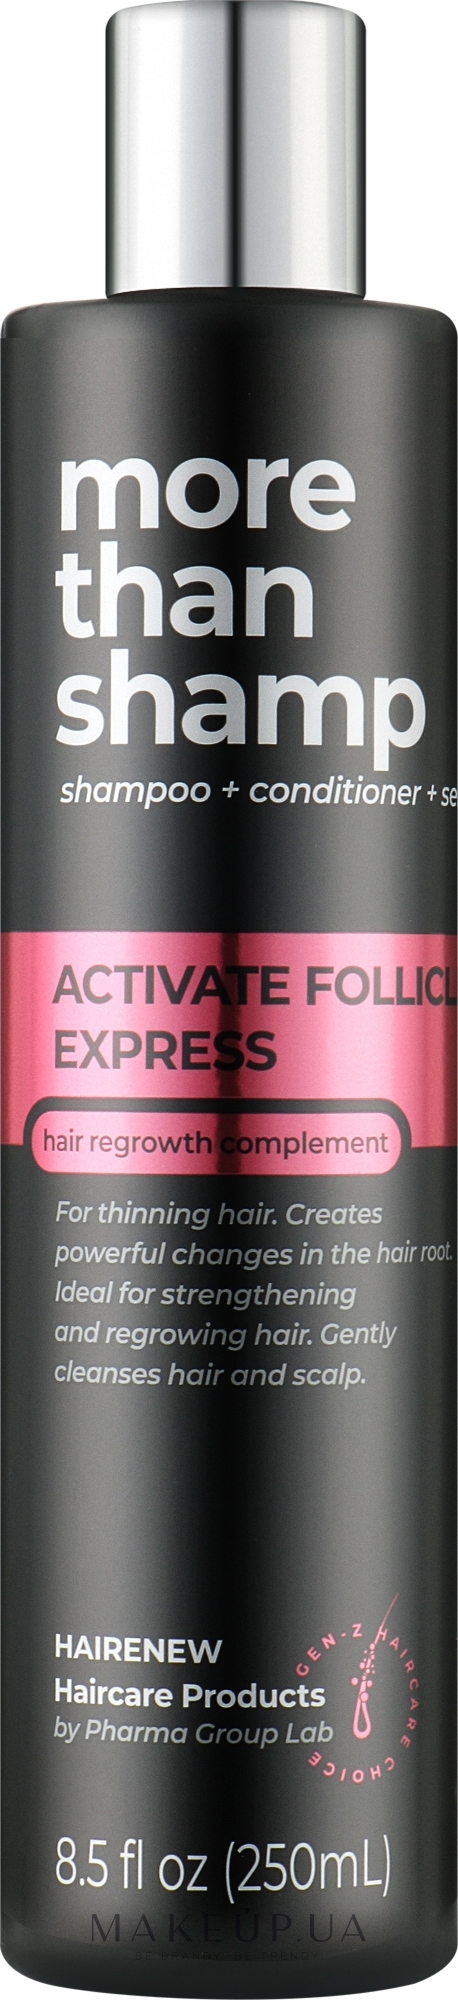 Шампунь для волос "Экспресс-активация фолликулов" - Hairenew Activate Follicles Expre Shampoo — фото 250ml